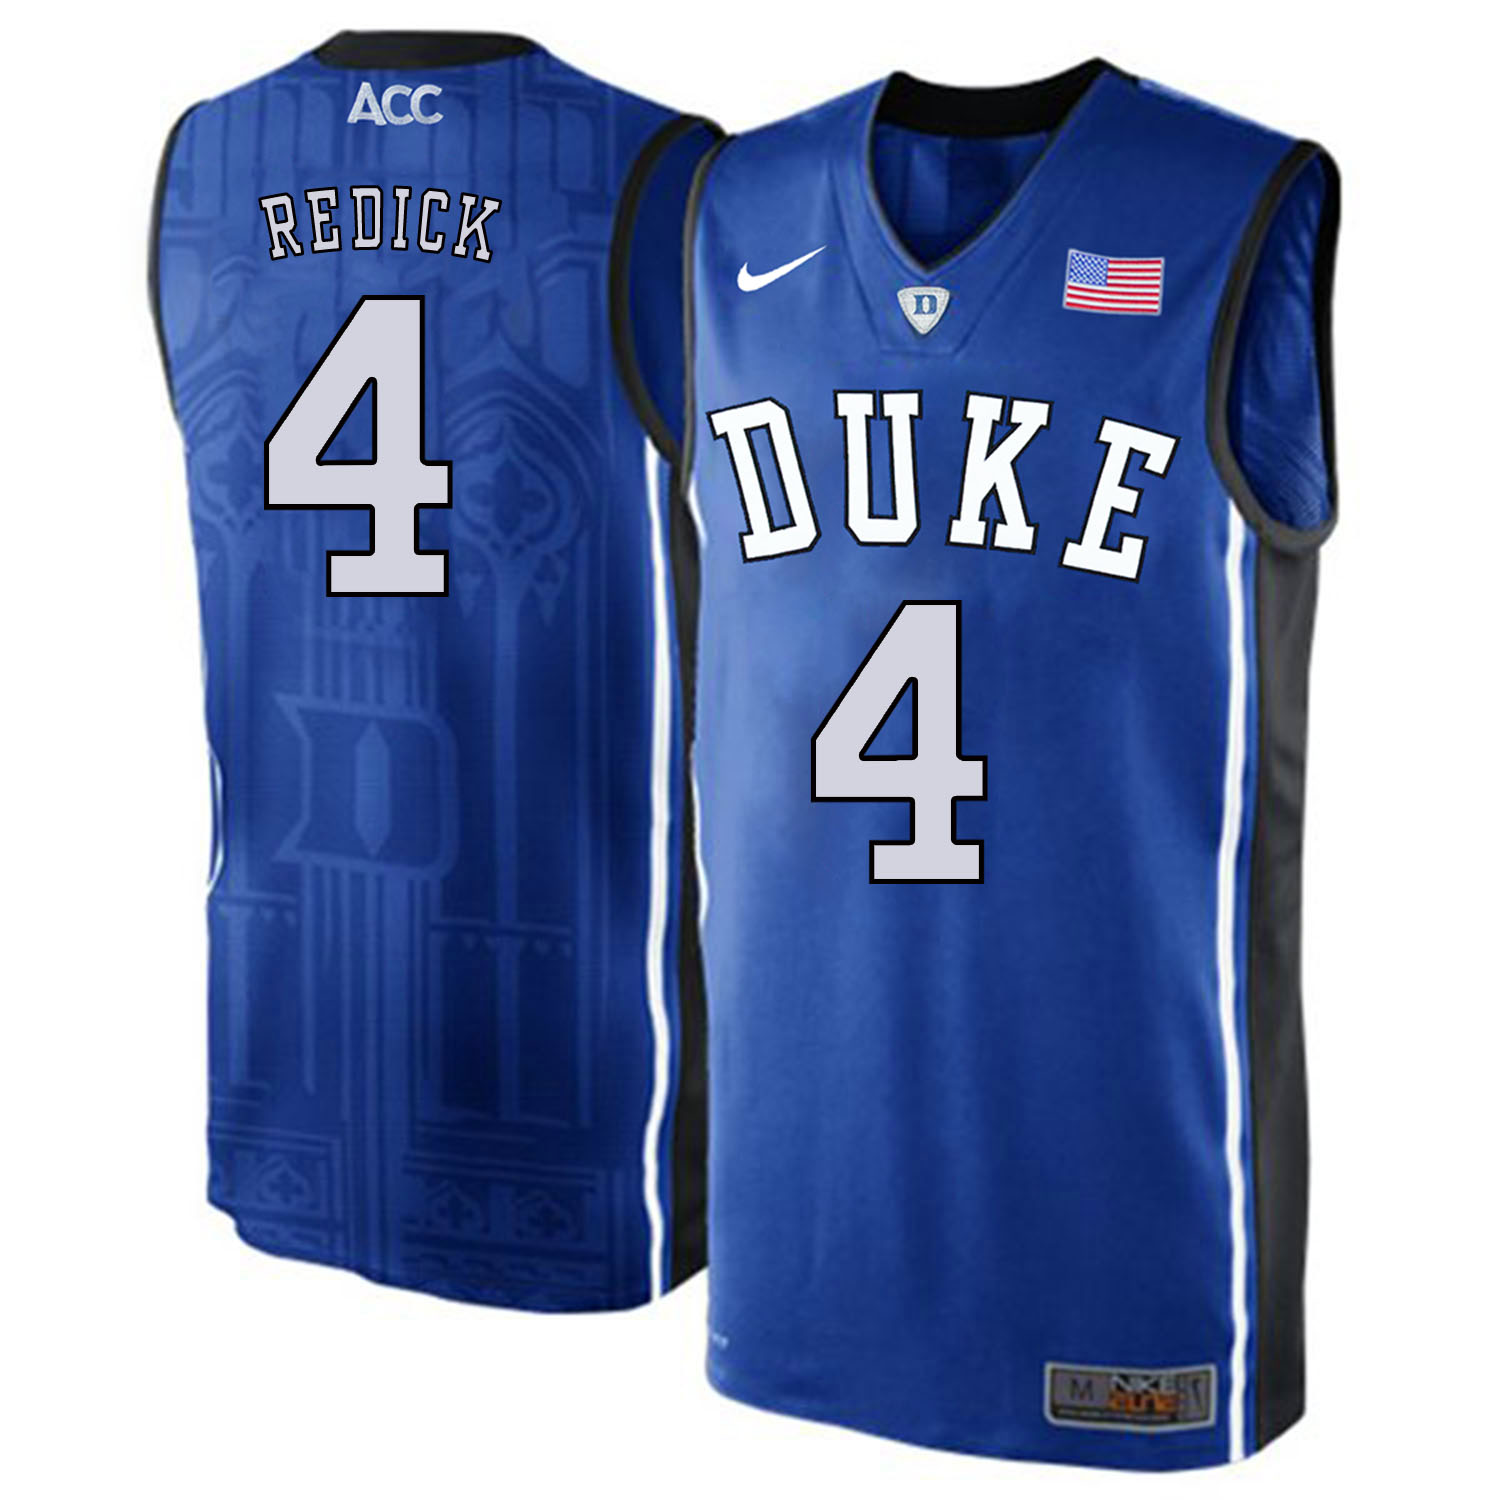 Duke Blue Devils 4 JJ Redick Blue Elite Nike College Basketball Jersey